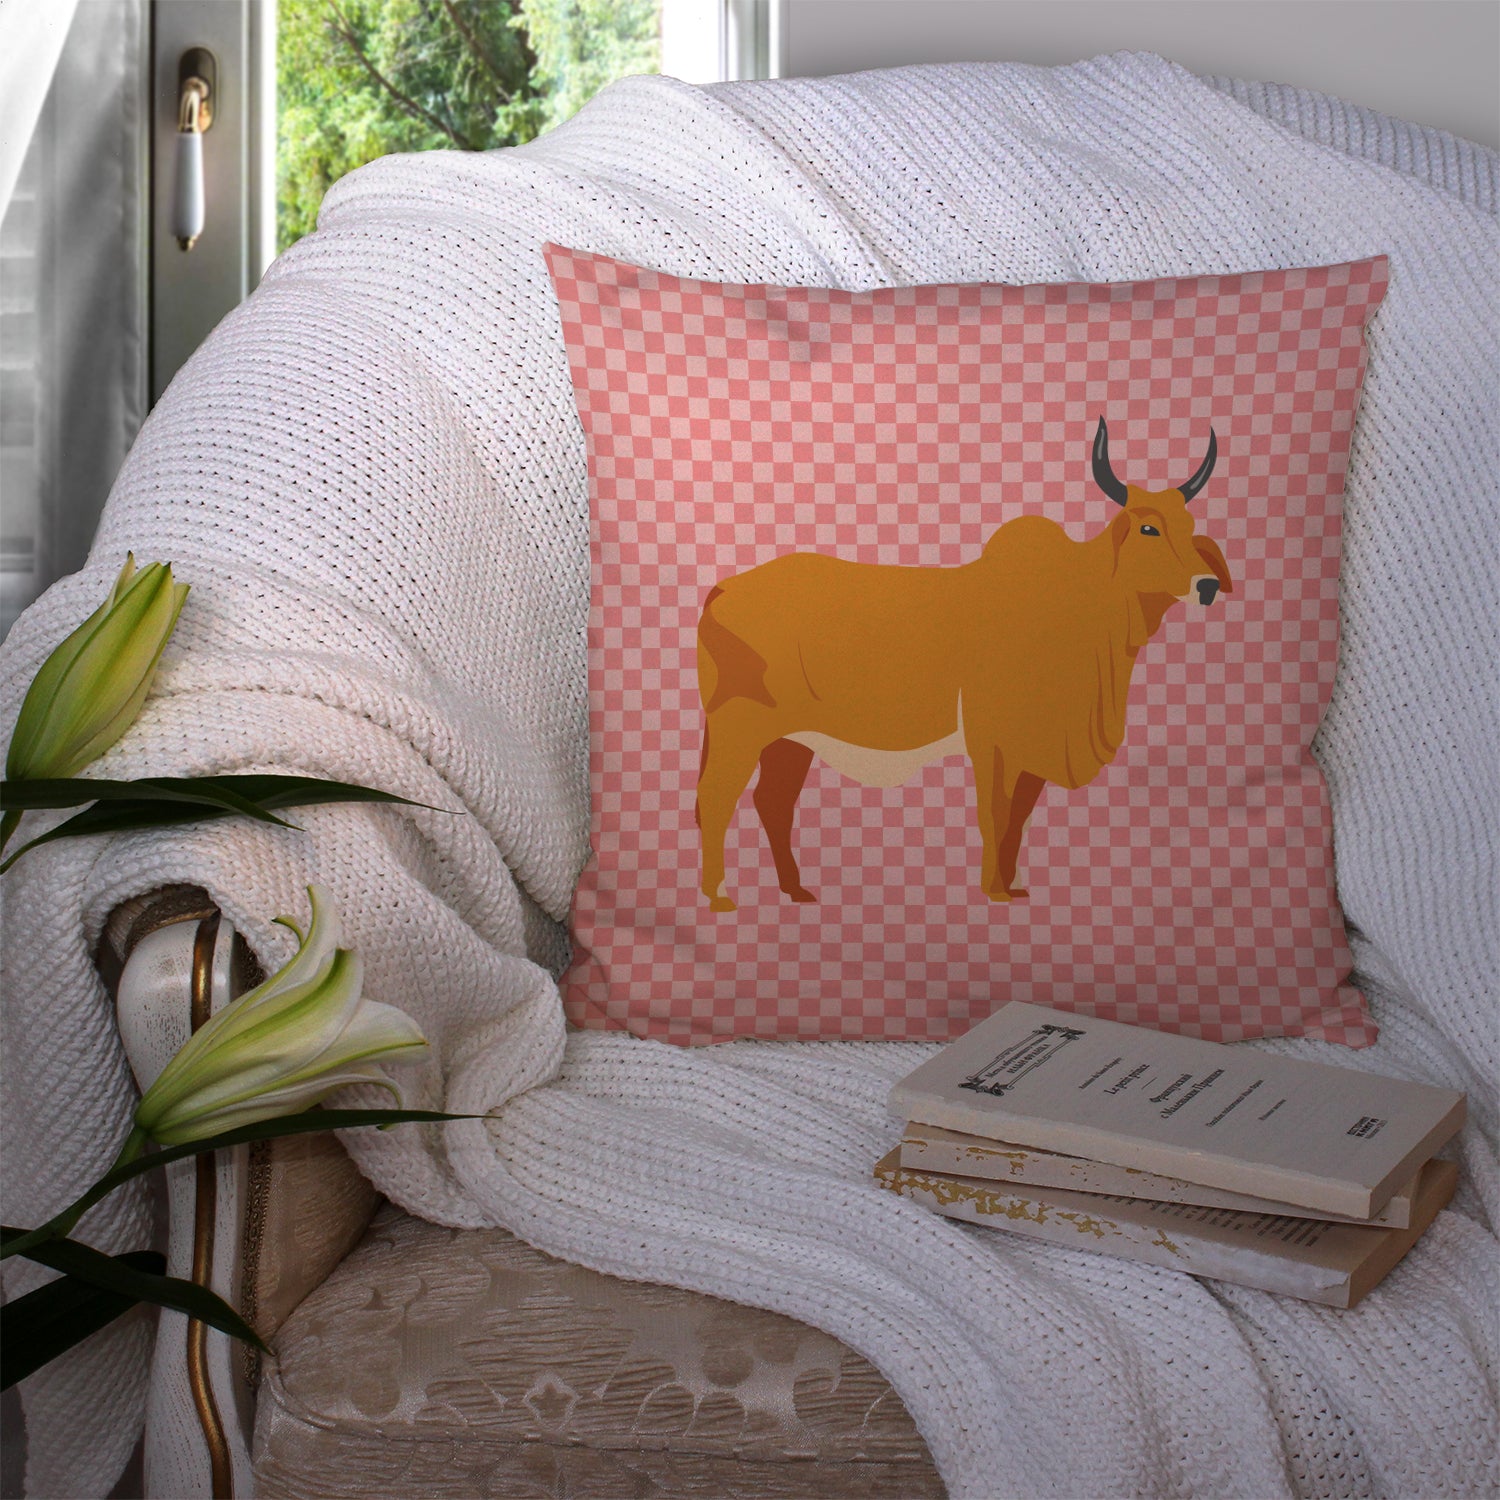 Zebu Indicine Cow Pink Check Fabric Decorative Pillow BB7825PW1414 - the-store.com